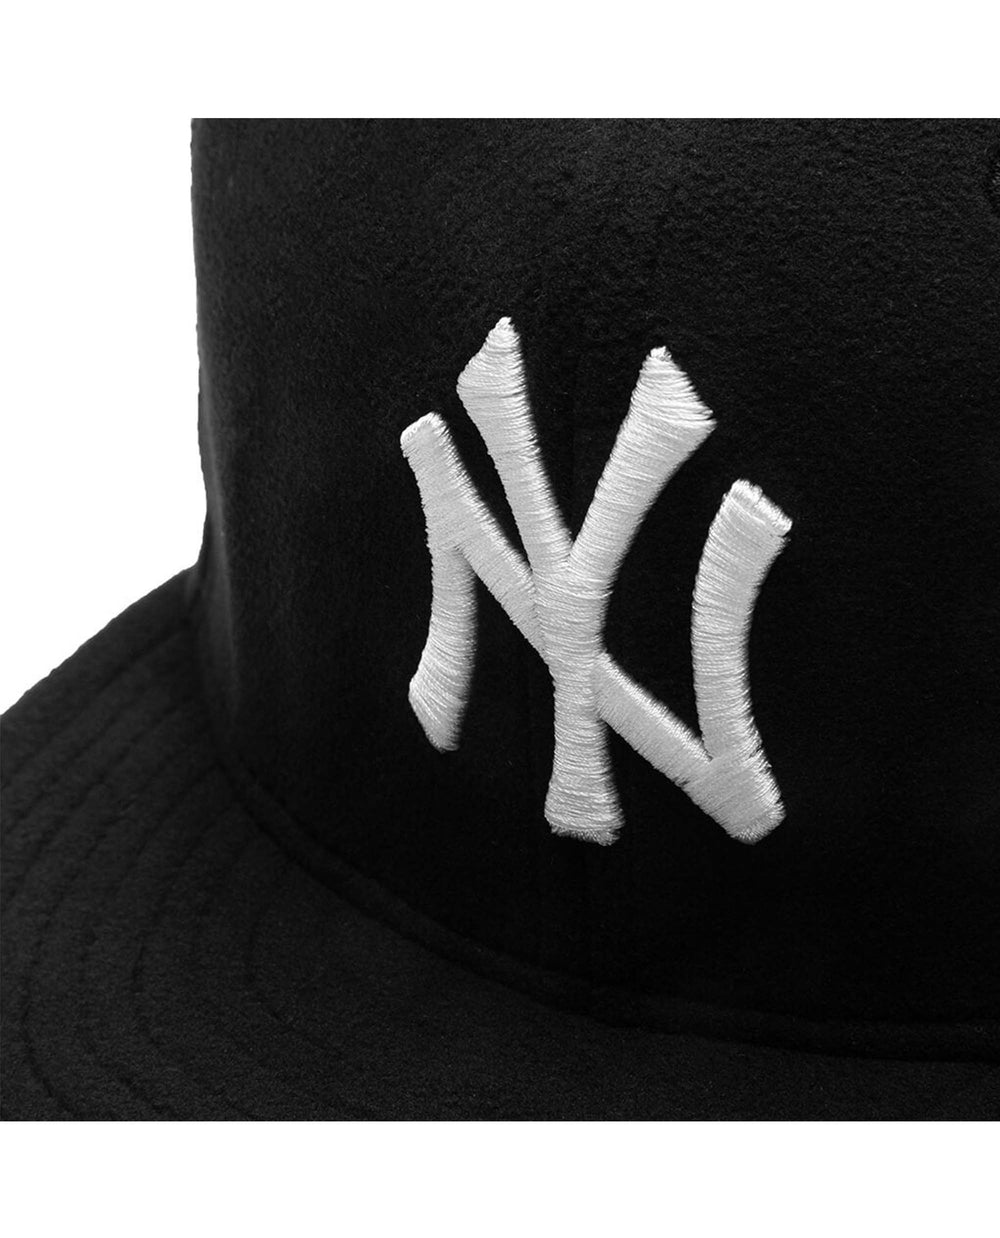 New York Black Yankees - Navy Wool Vintage Flatbill